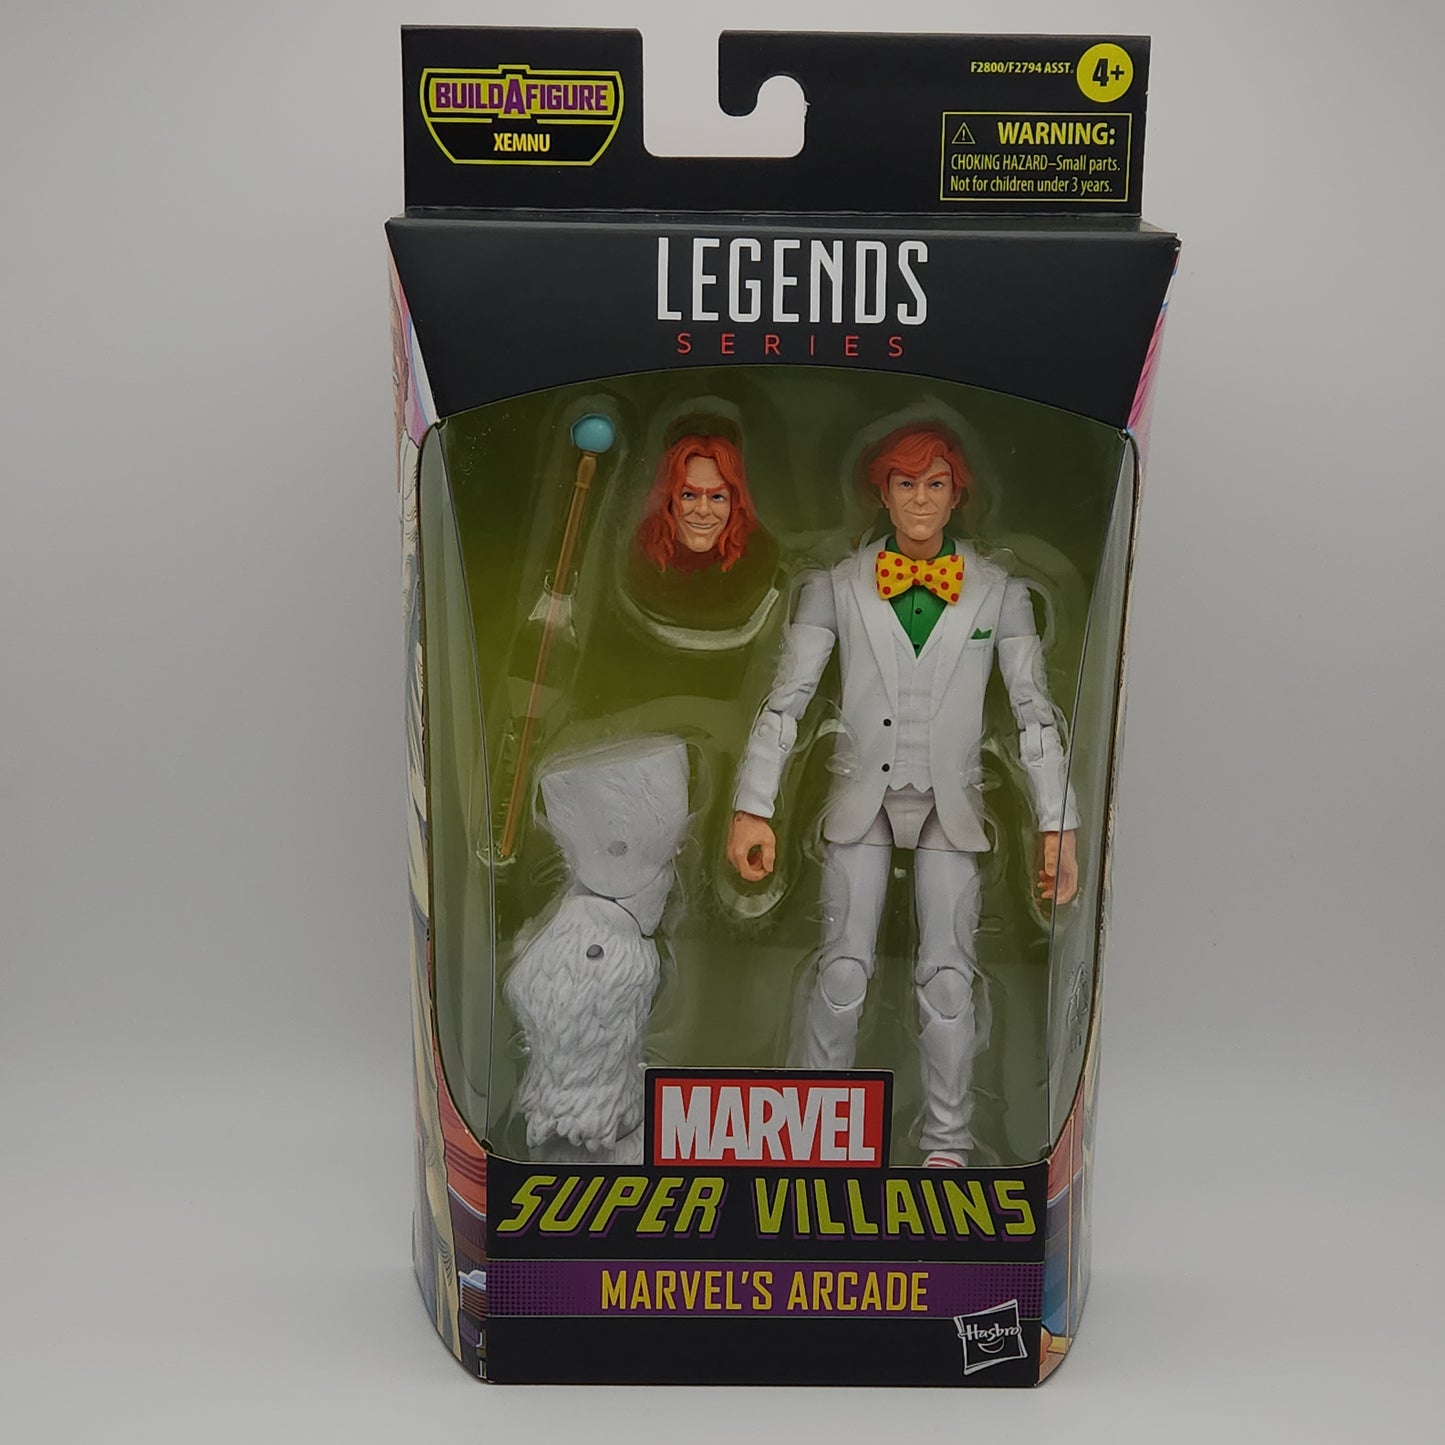 Marvel Legends Series- Super Villains: Marvel's Arcade